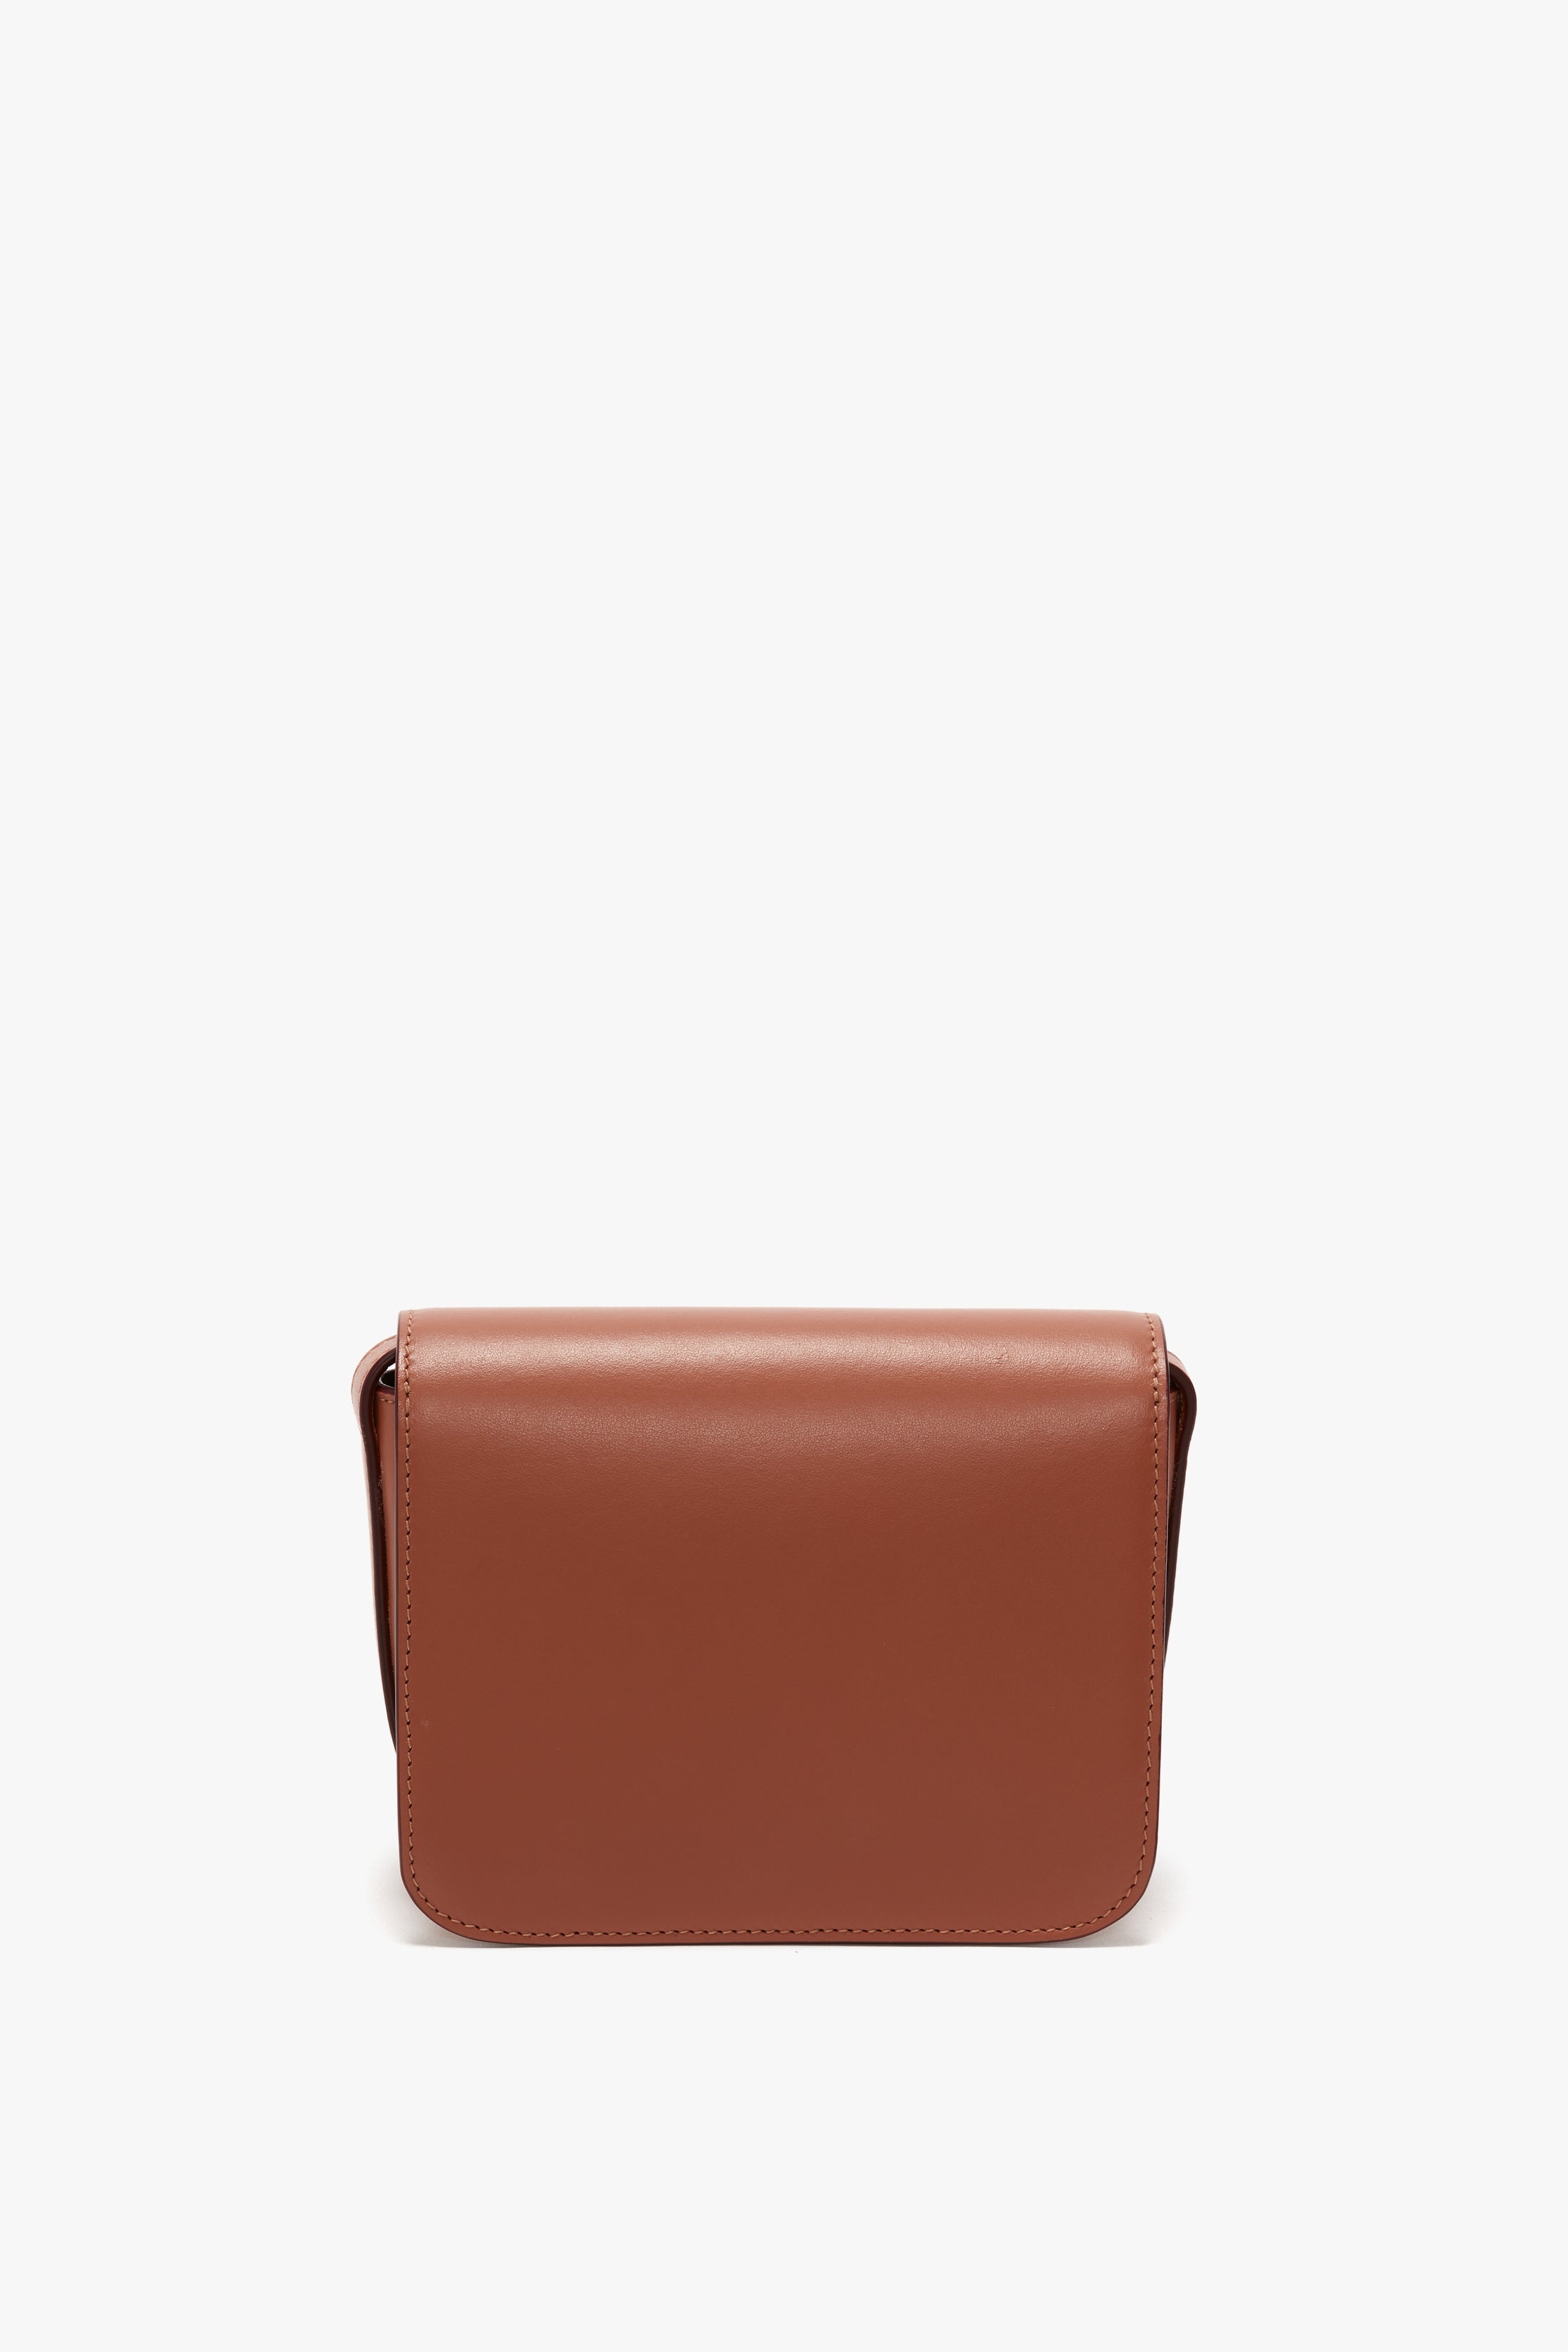 Mini Chain Shoulder Bag In Tan Leather - 4